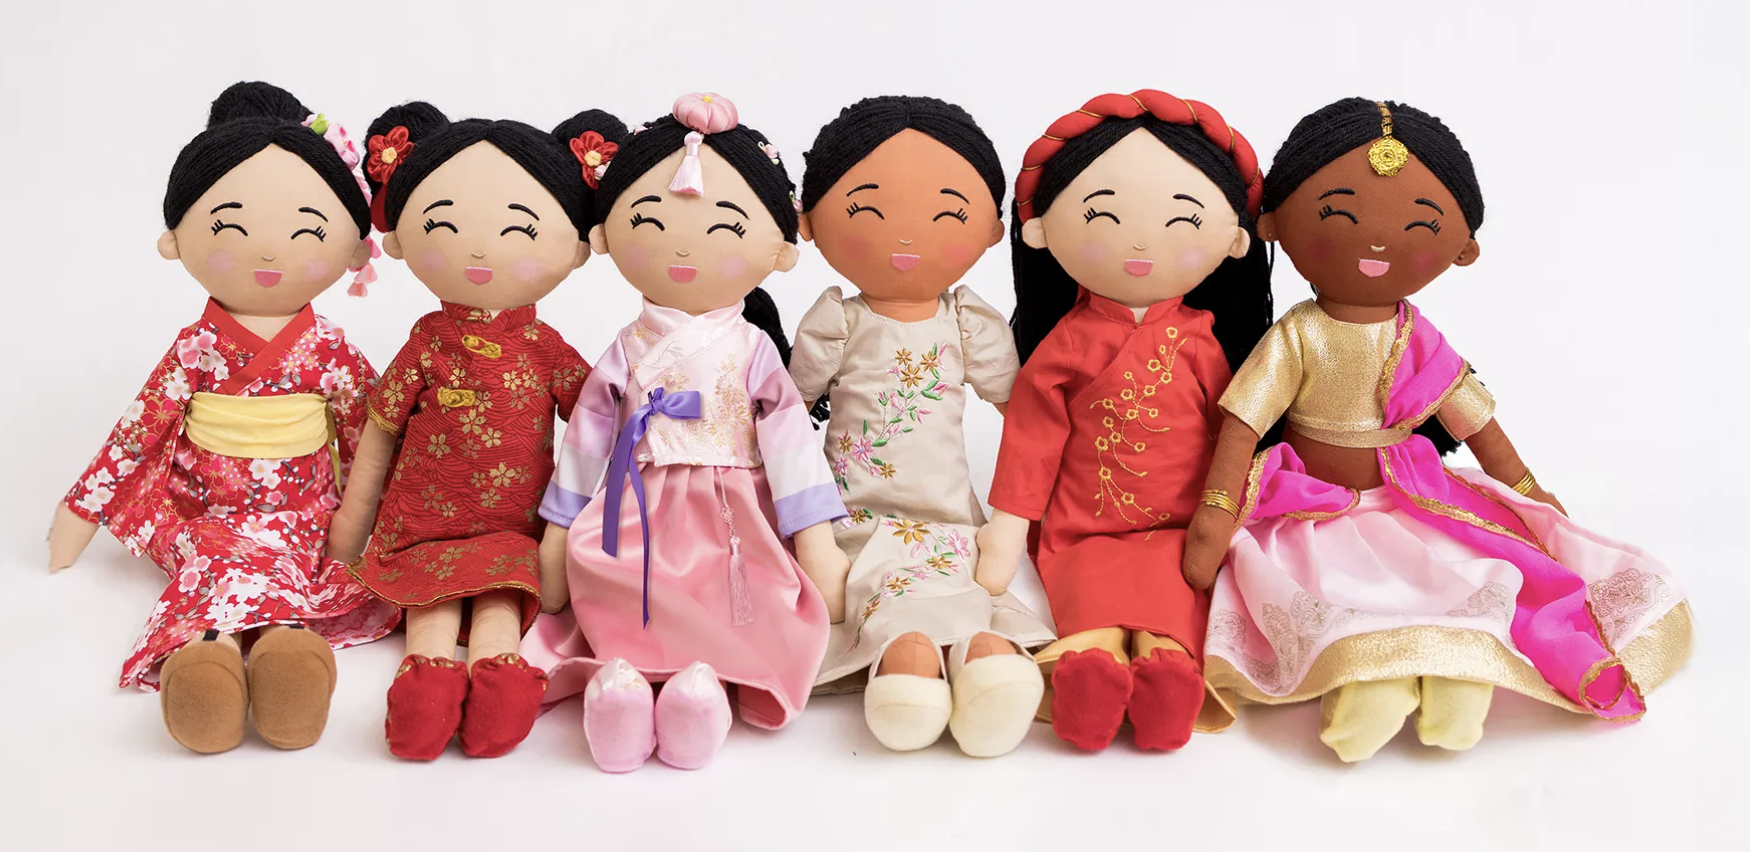 Six cultural dolls wearing beautiful traditional garments